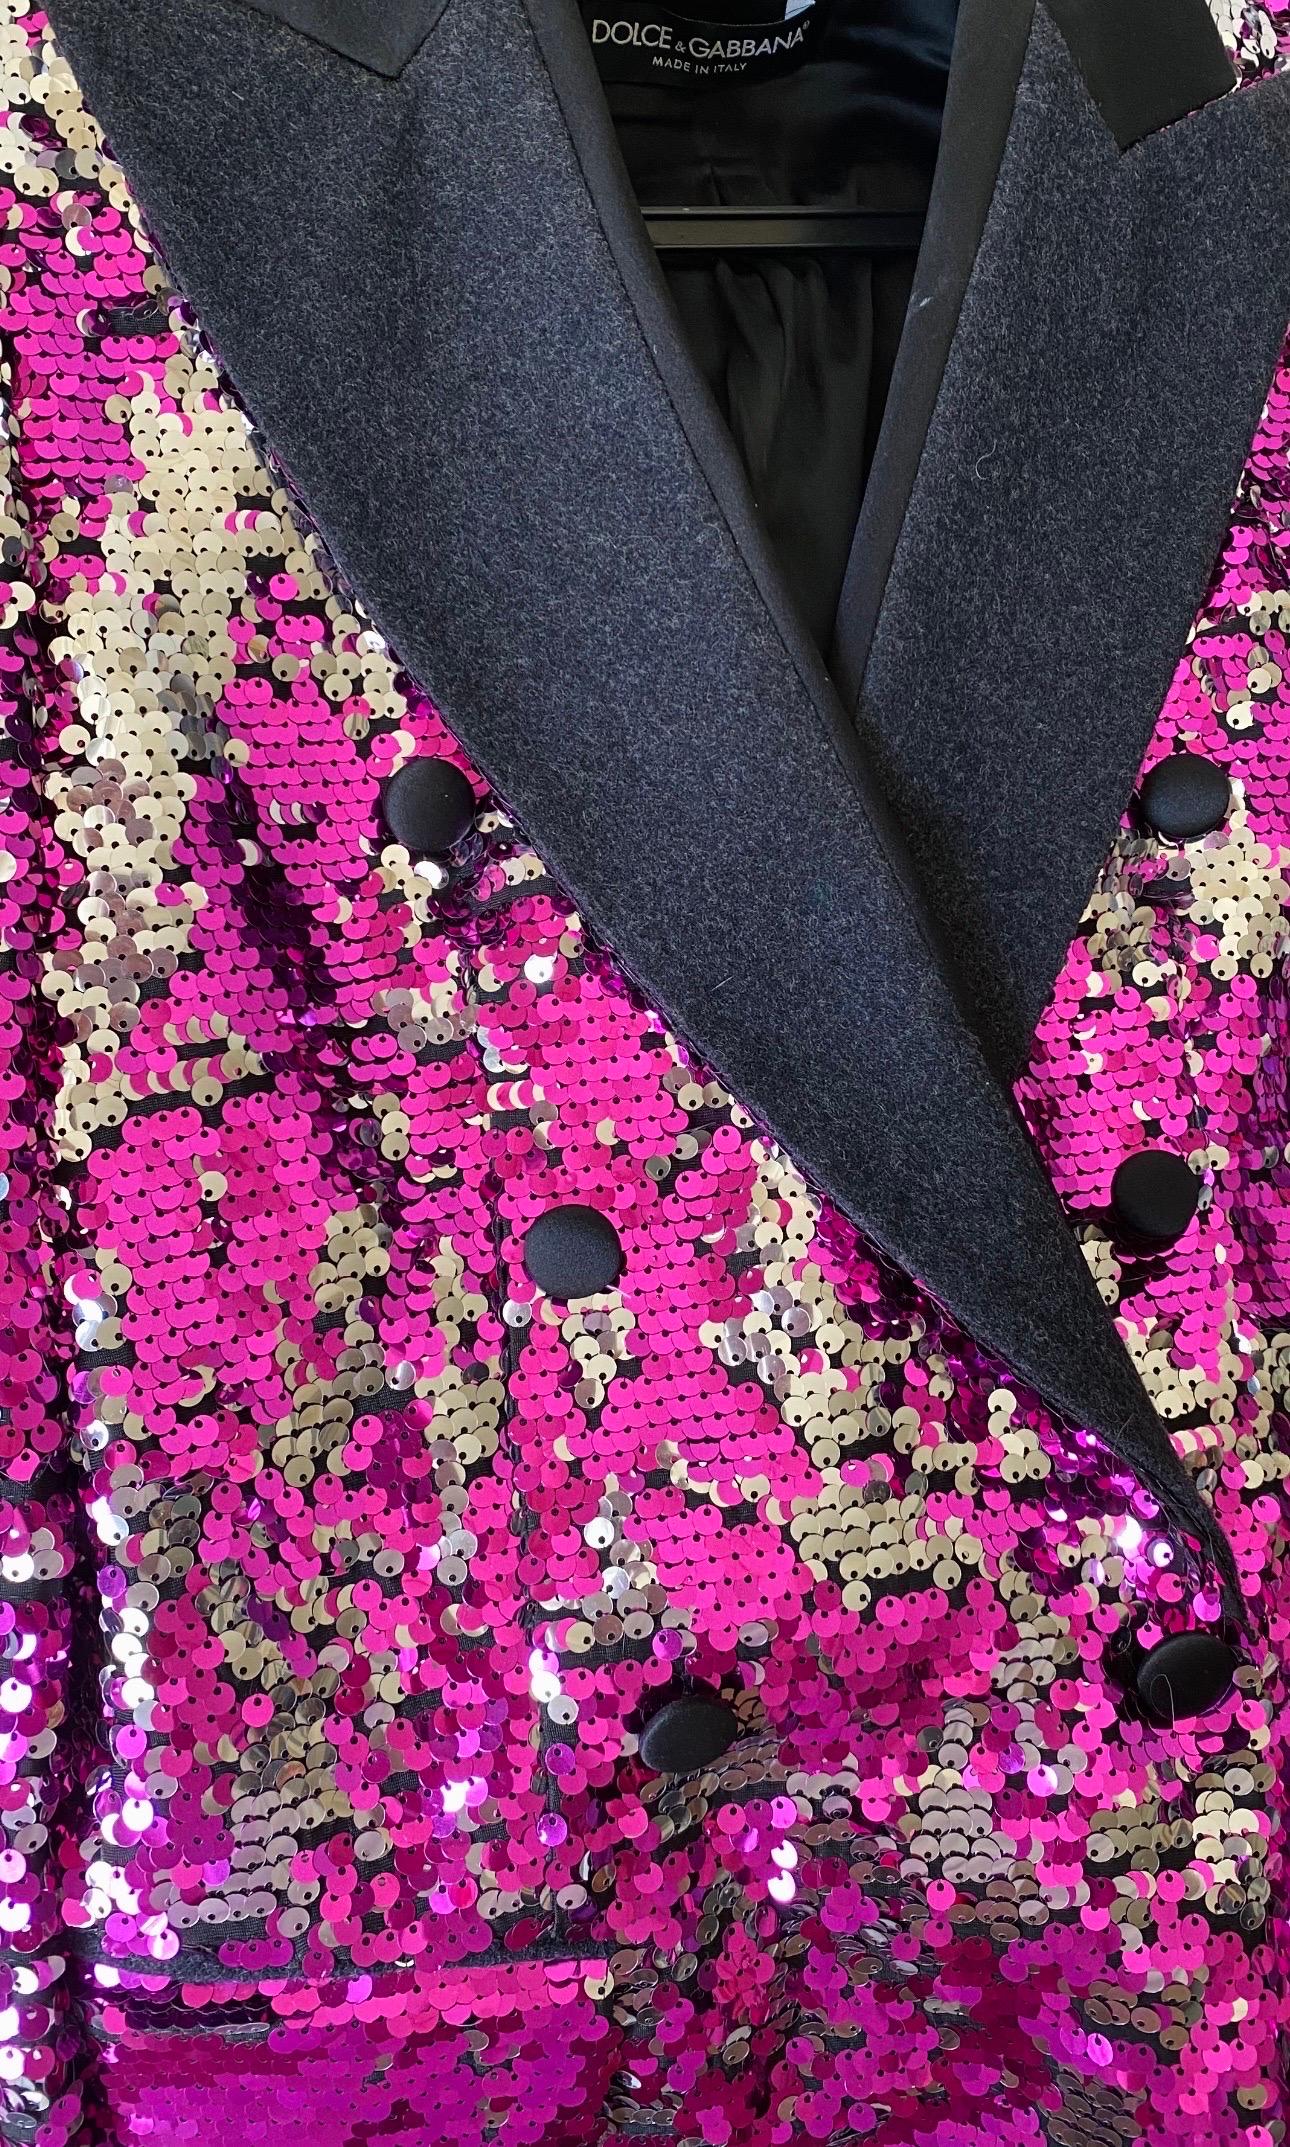 Women's Dolce & Gabbana runway 2011 pink sequined jacket  For Sale